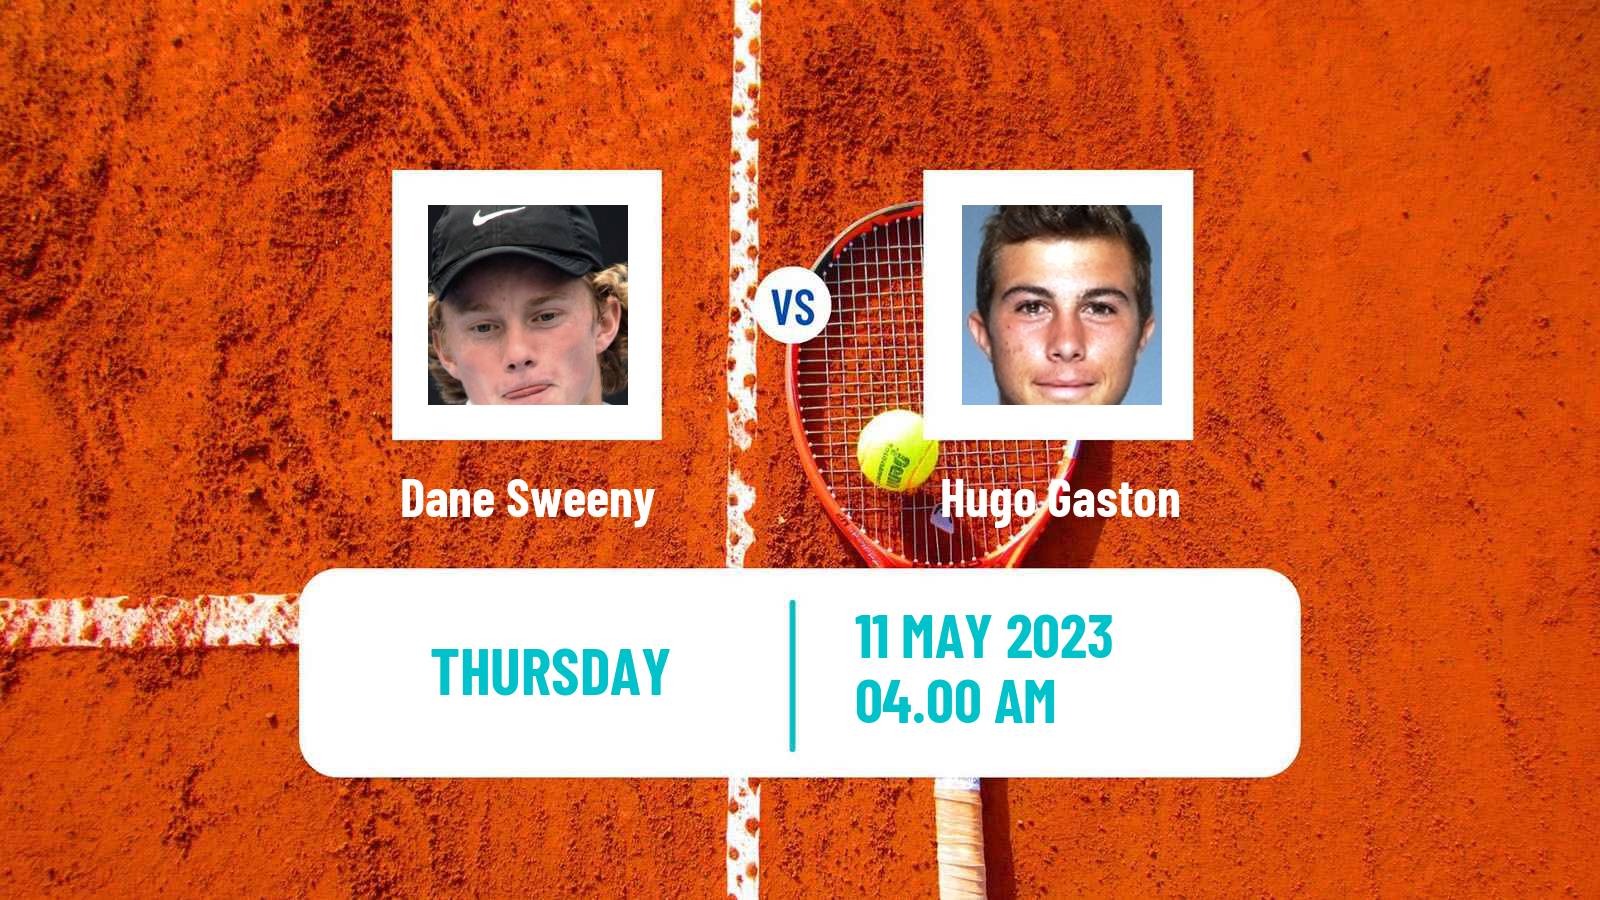 Tennis ATP Challenger Dane Sweeny - Hugo Gaston